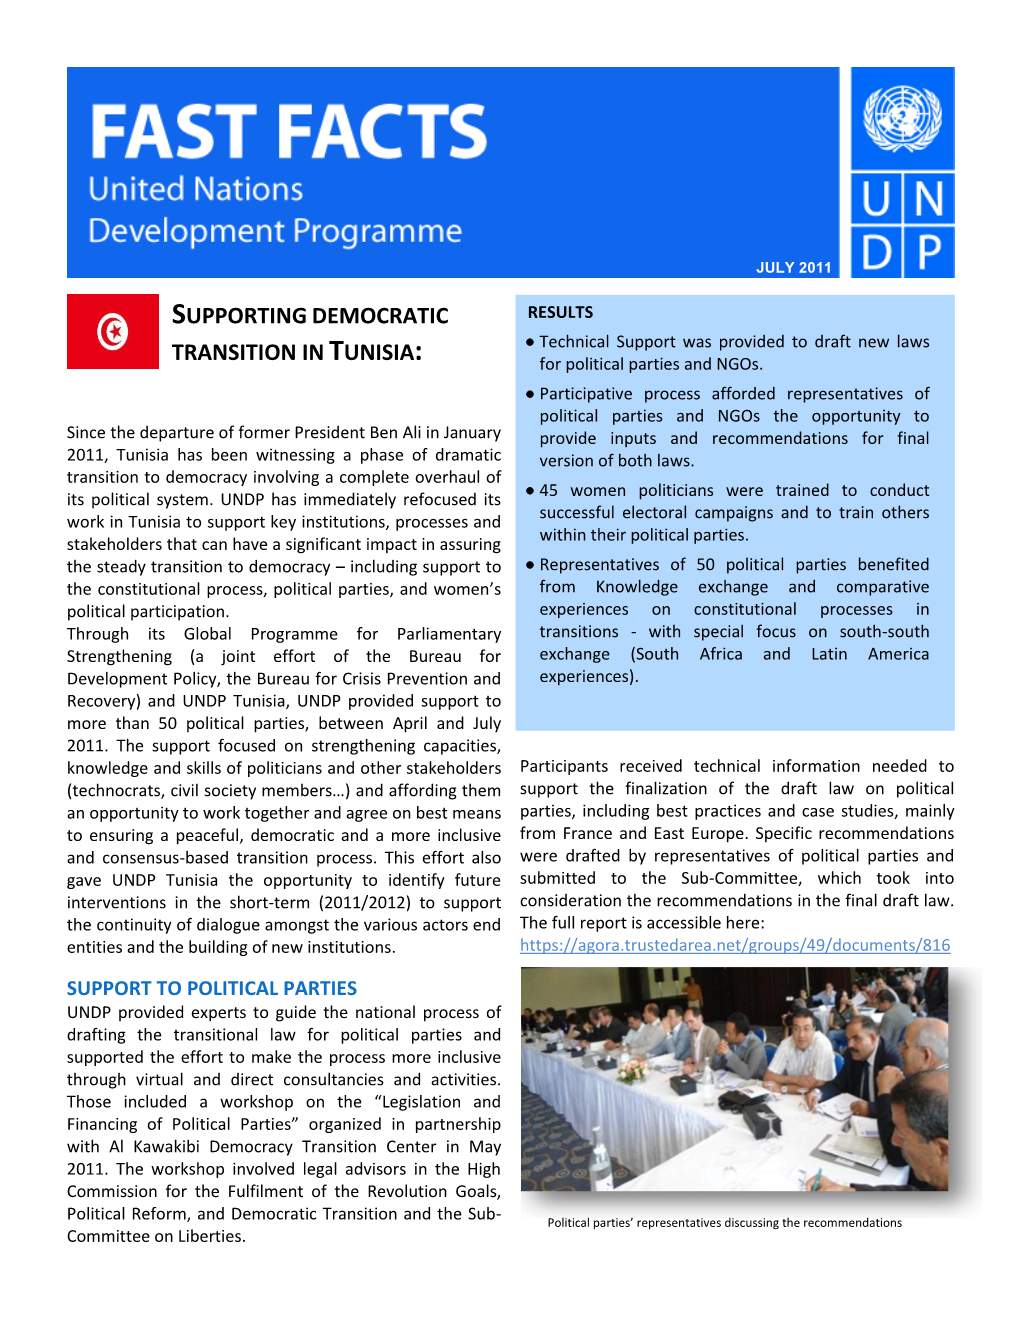 Supporting Democratic Transition in Tunisia